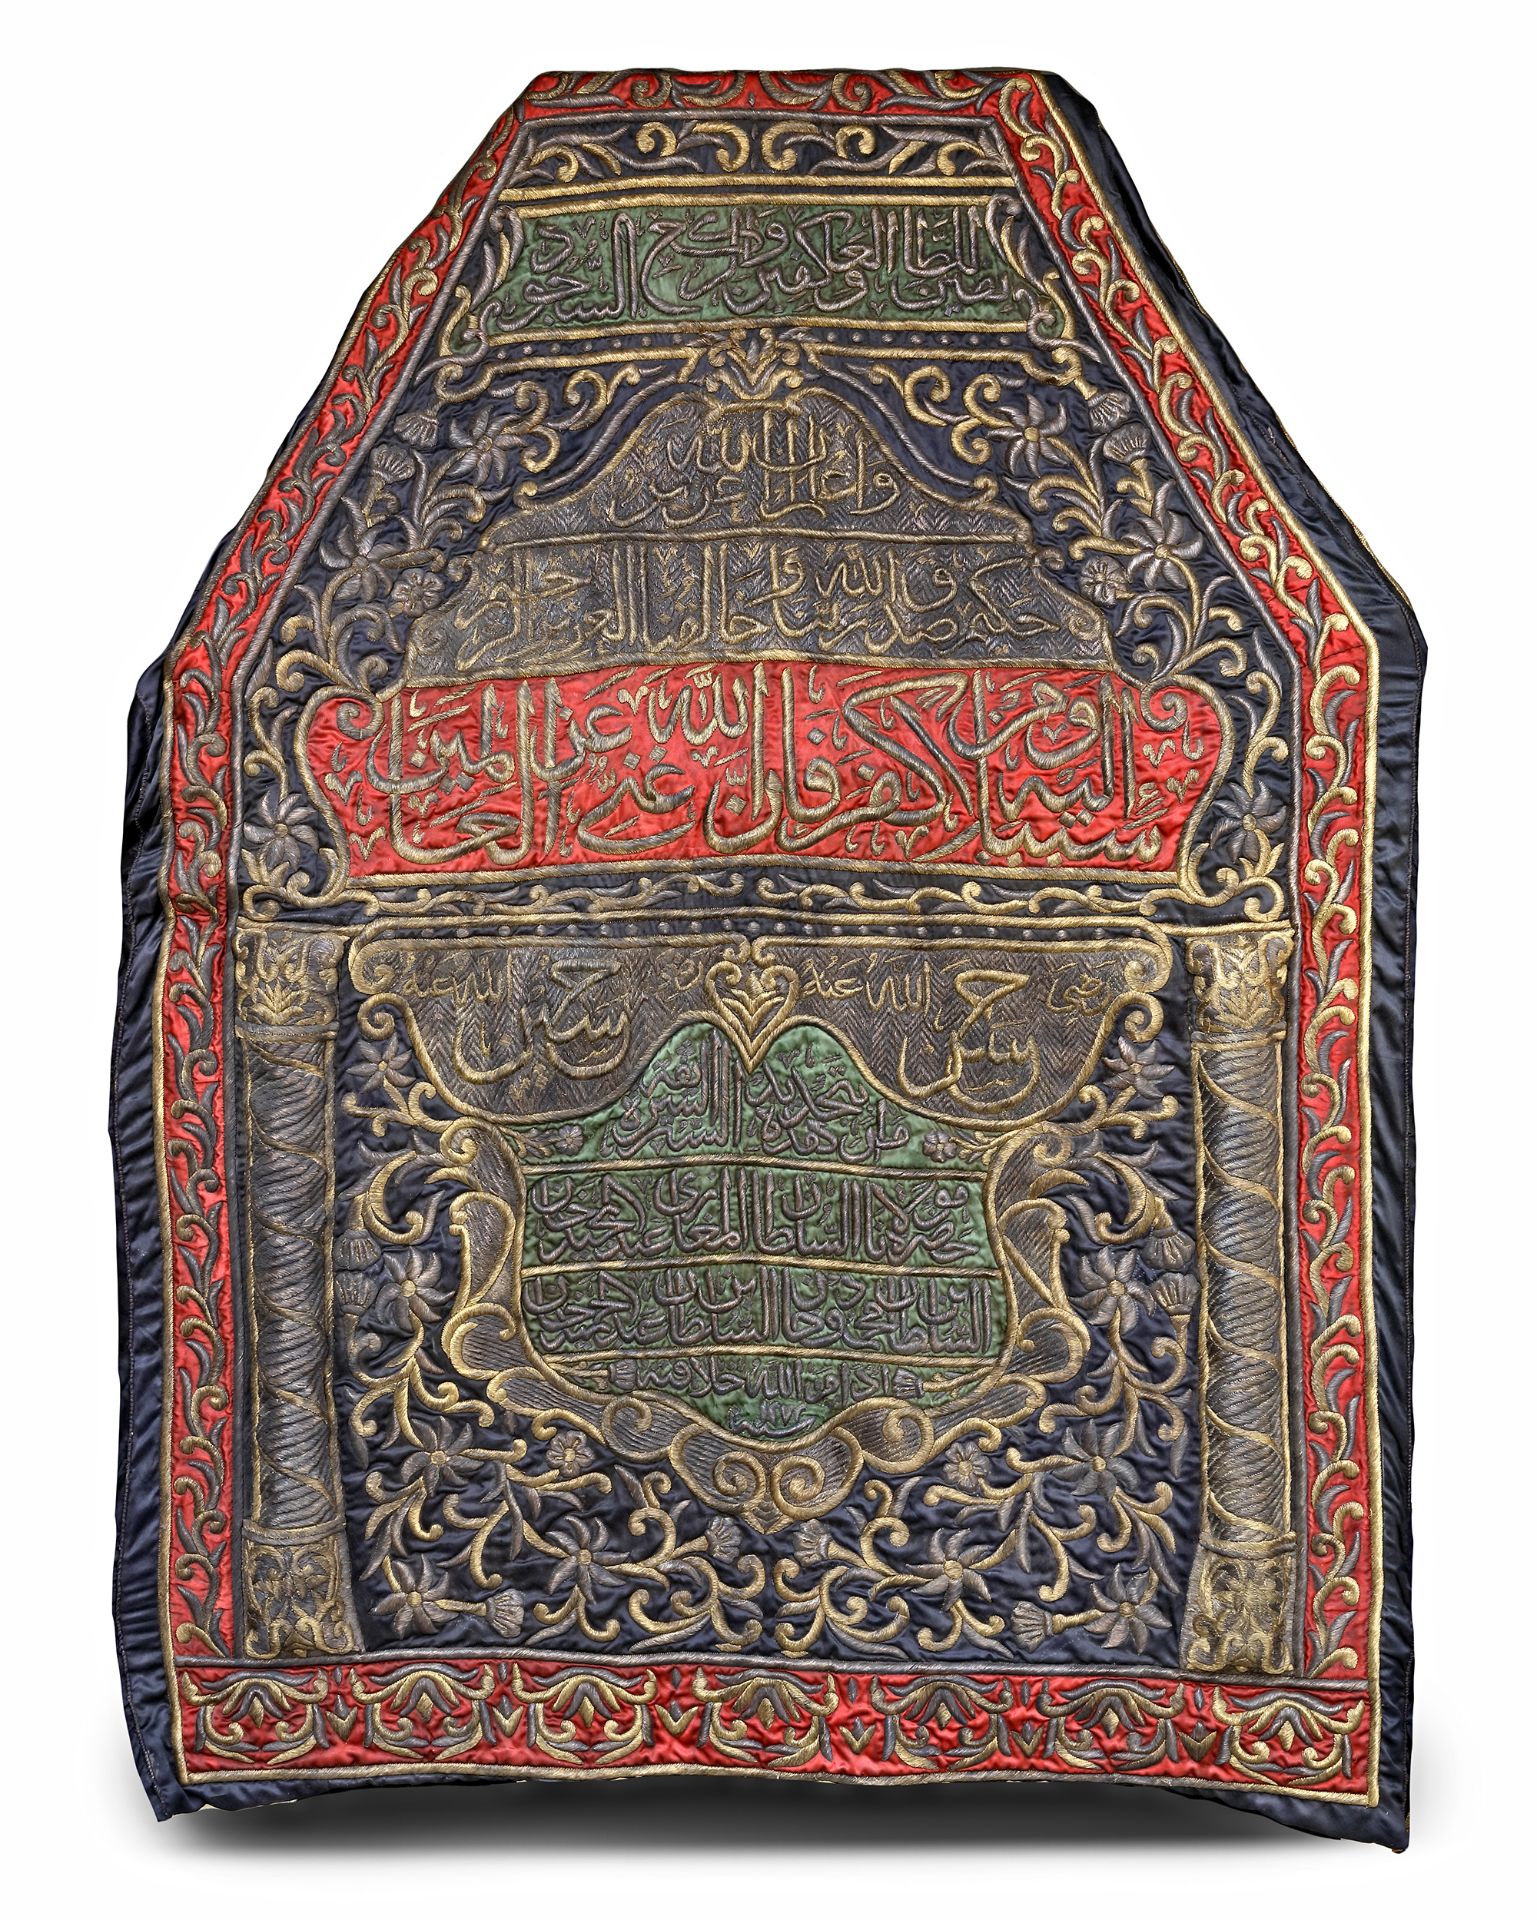 AN OTTOMAN METAL-THREAD EMBROIDERED MAQAM IBRAHIM COVER, 1272 AH/1855 AD - Image 5 of 6